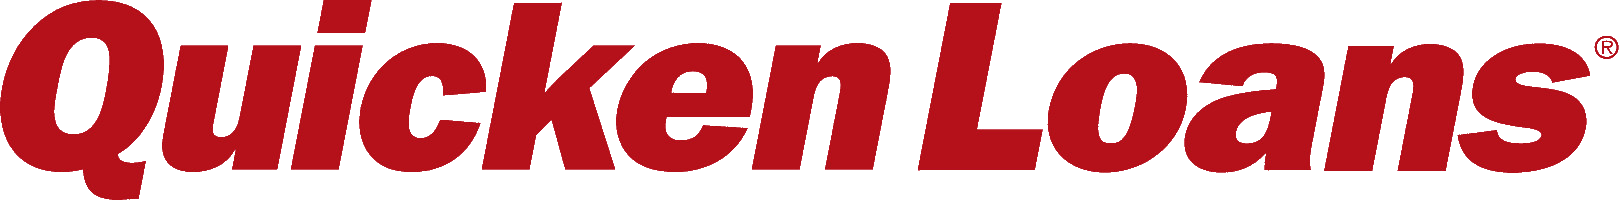 Quicken 2017 Logo - Quicken Logos